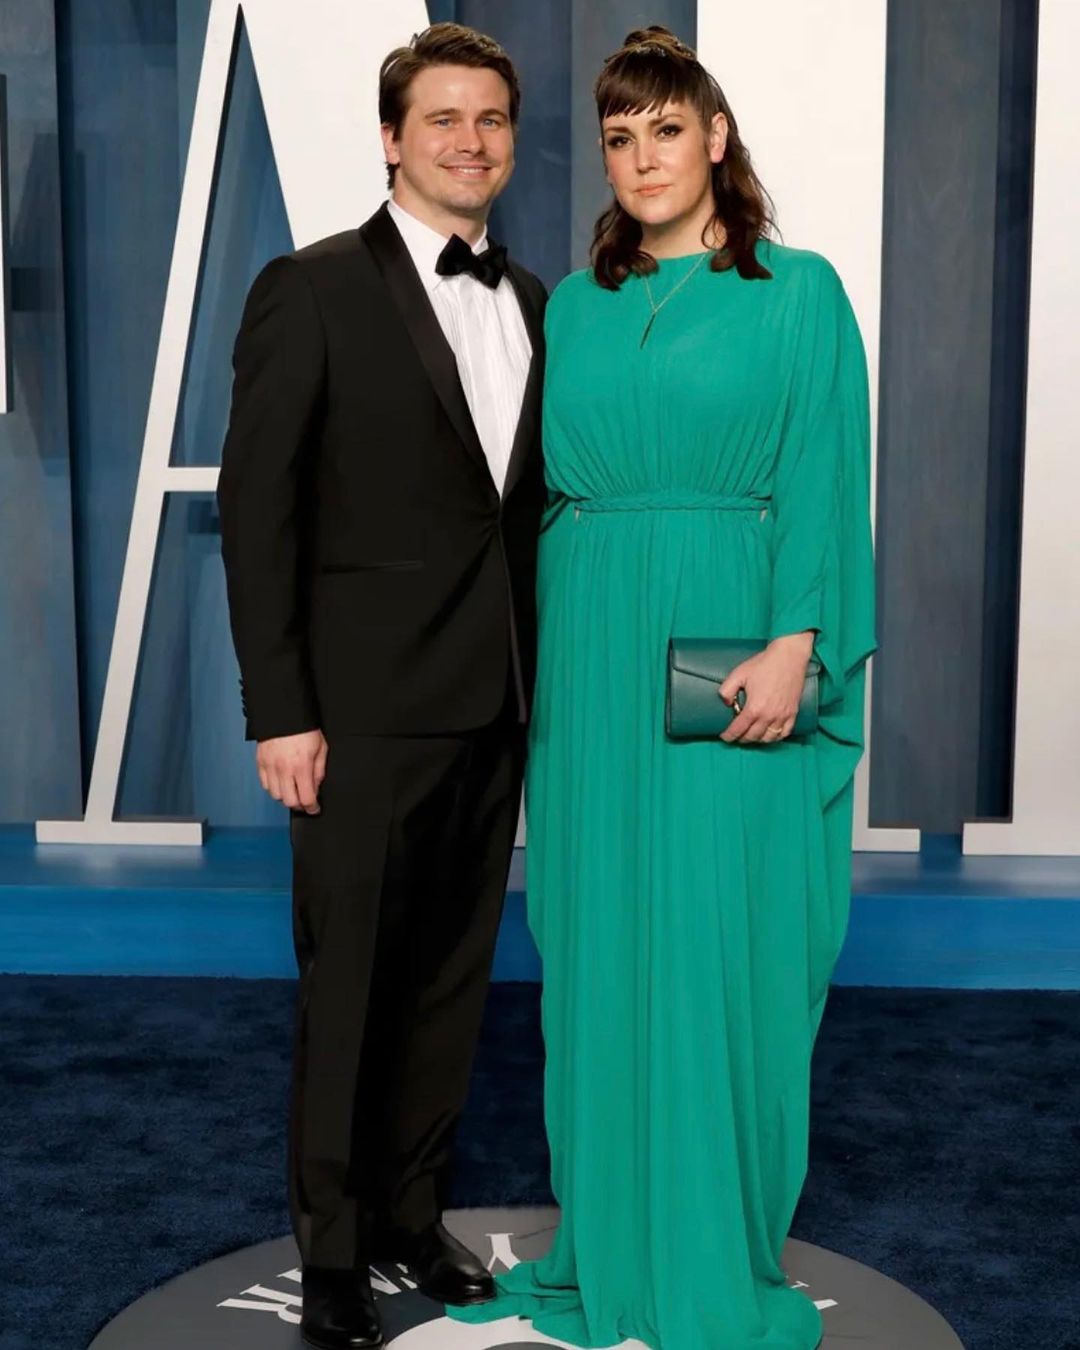 Melanie Lynskey with her husband, Jason Ritter, at Vanity Fair Oscar's Party